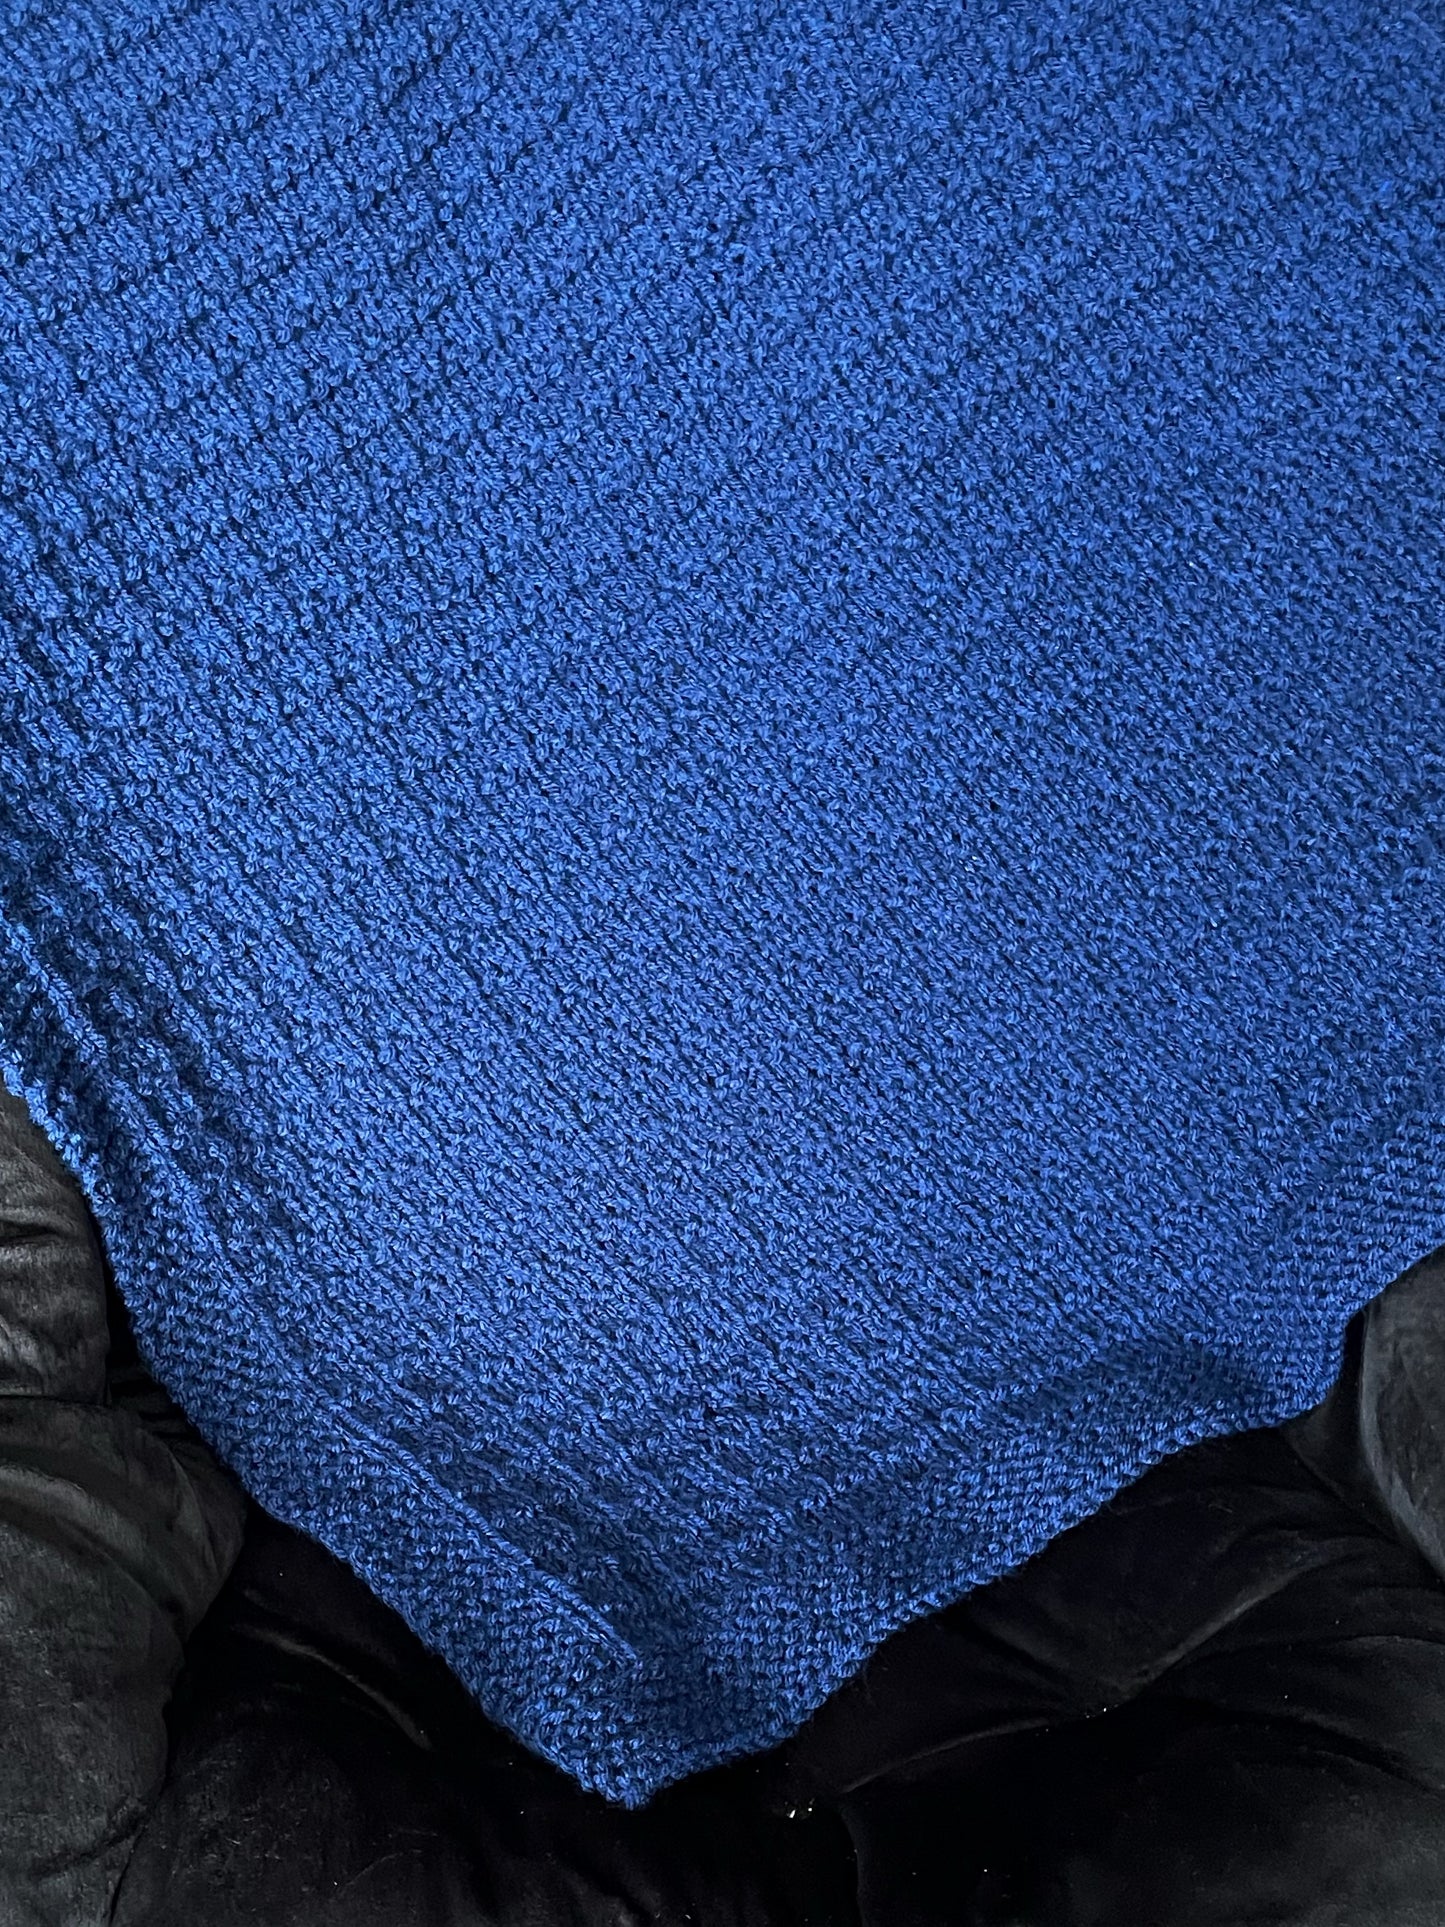 Checkered Lap Blanket